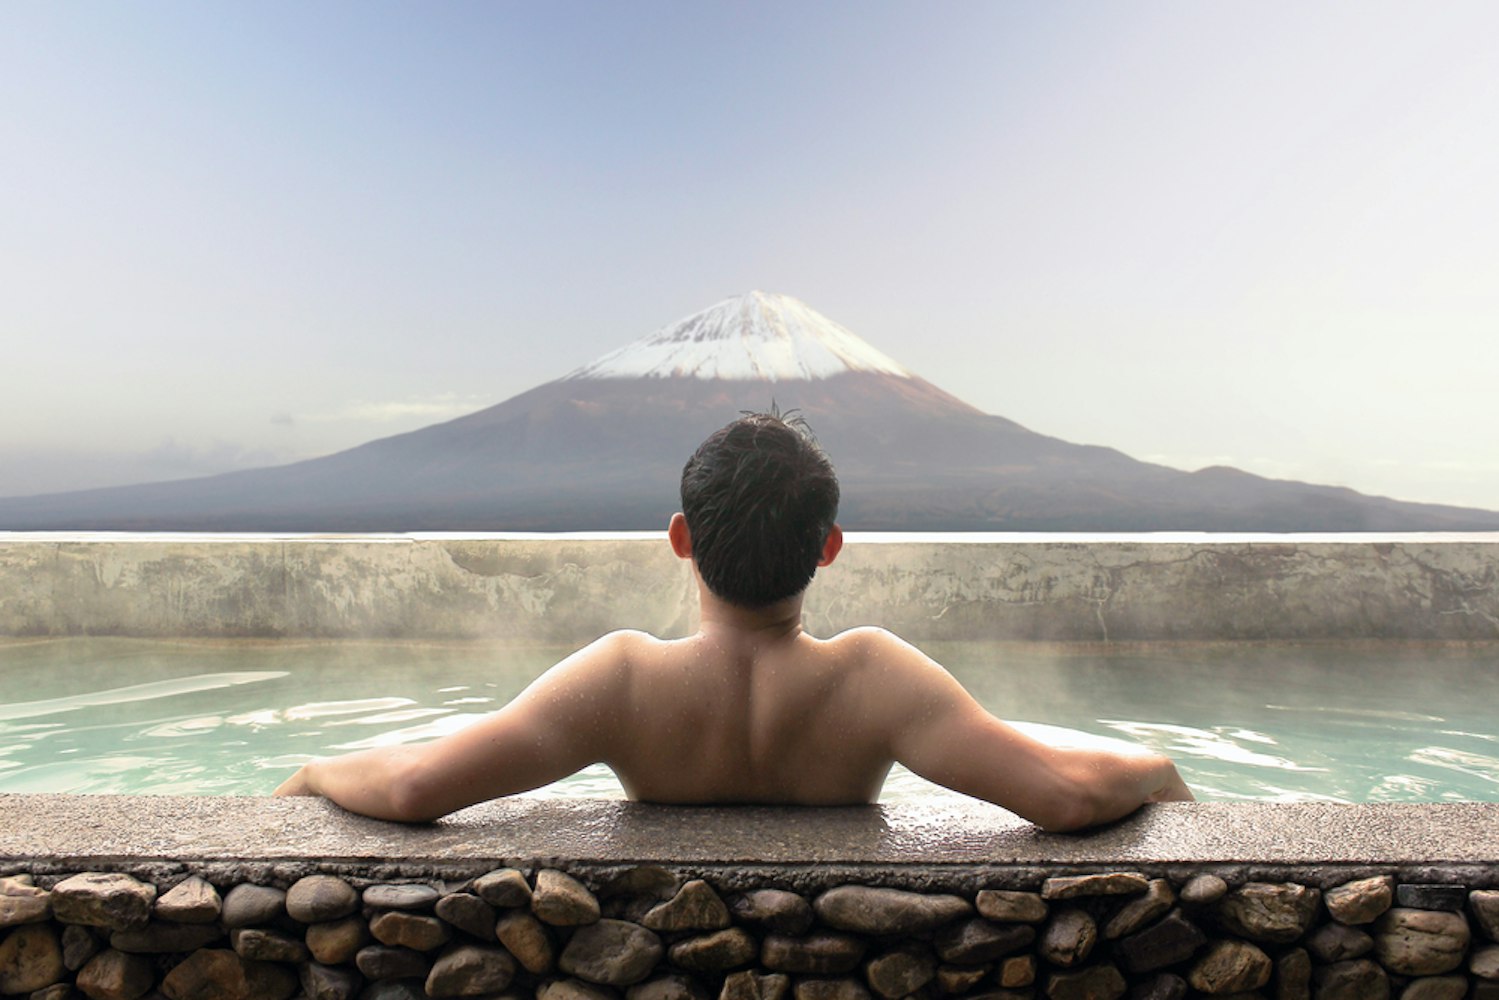 Hot Springs in Mount Fuji